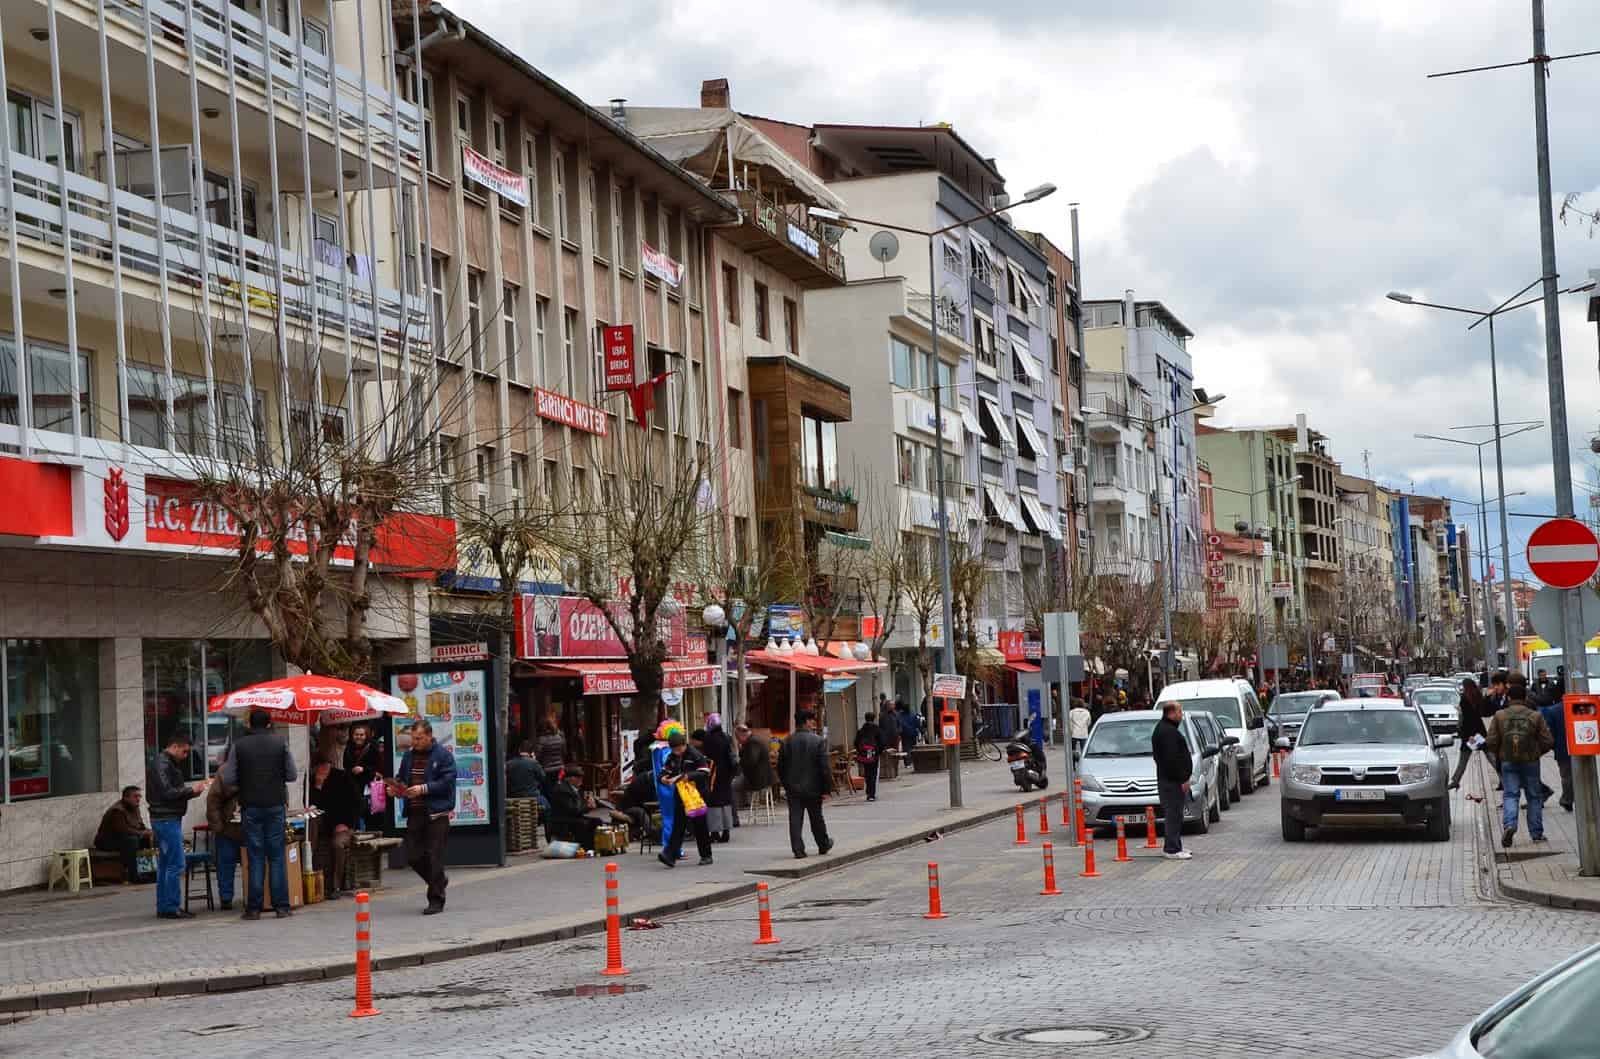 İsmet Pasha Street in Uşak, Turkey